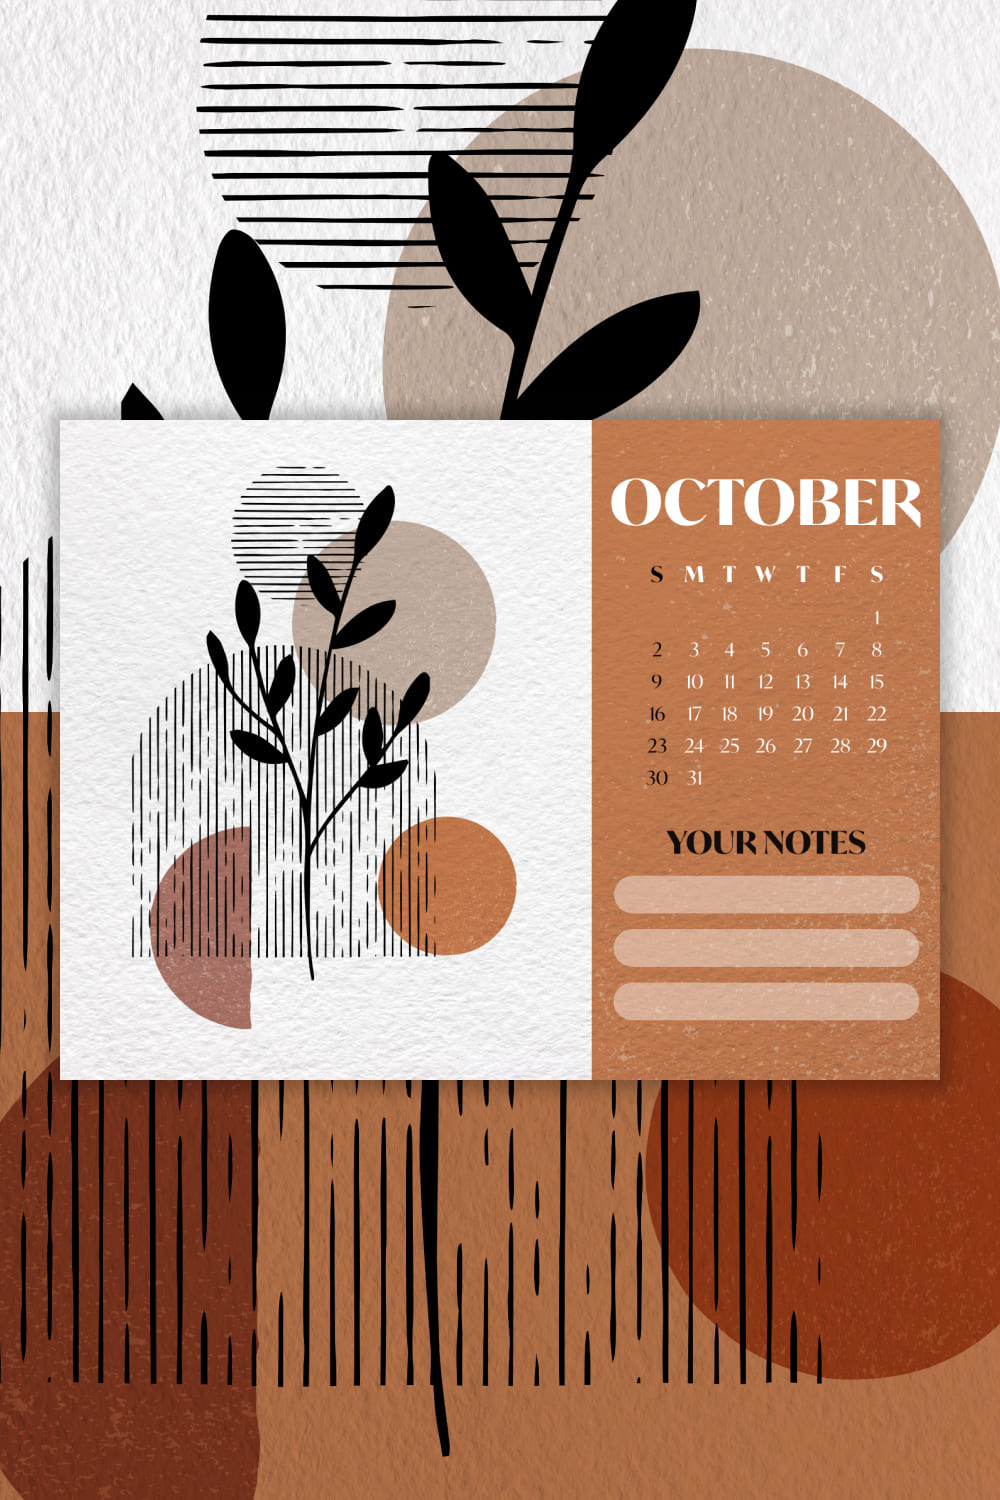 Free Calendar October Pinterest image.